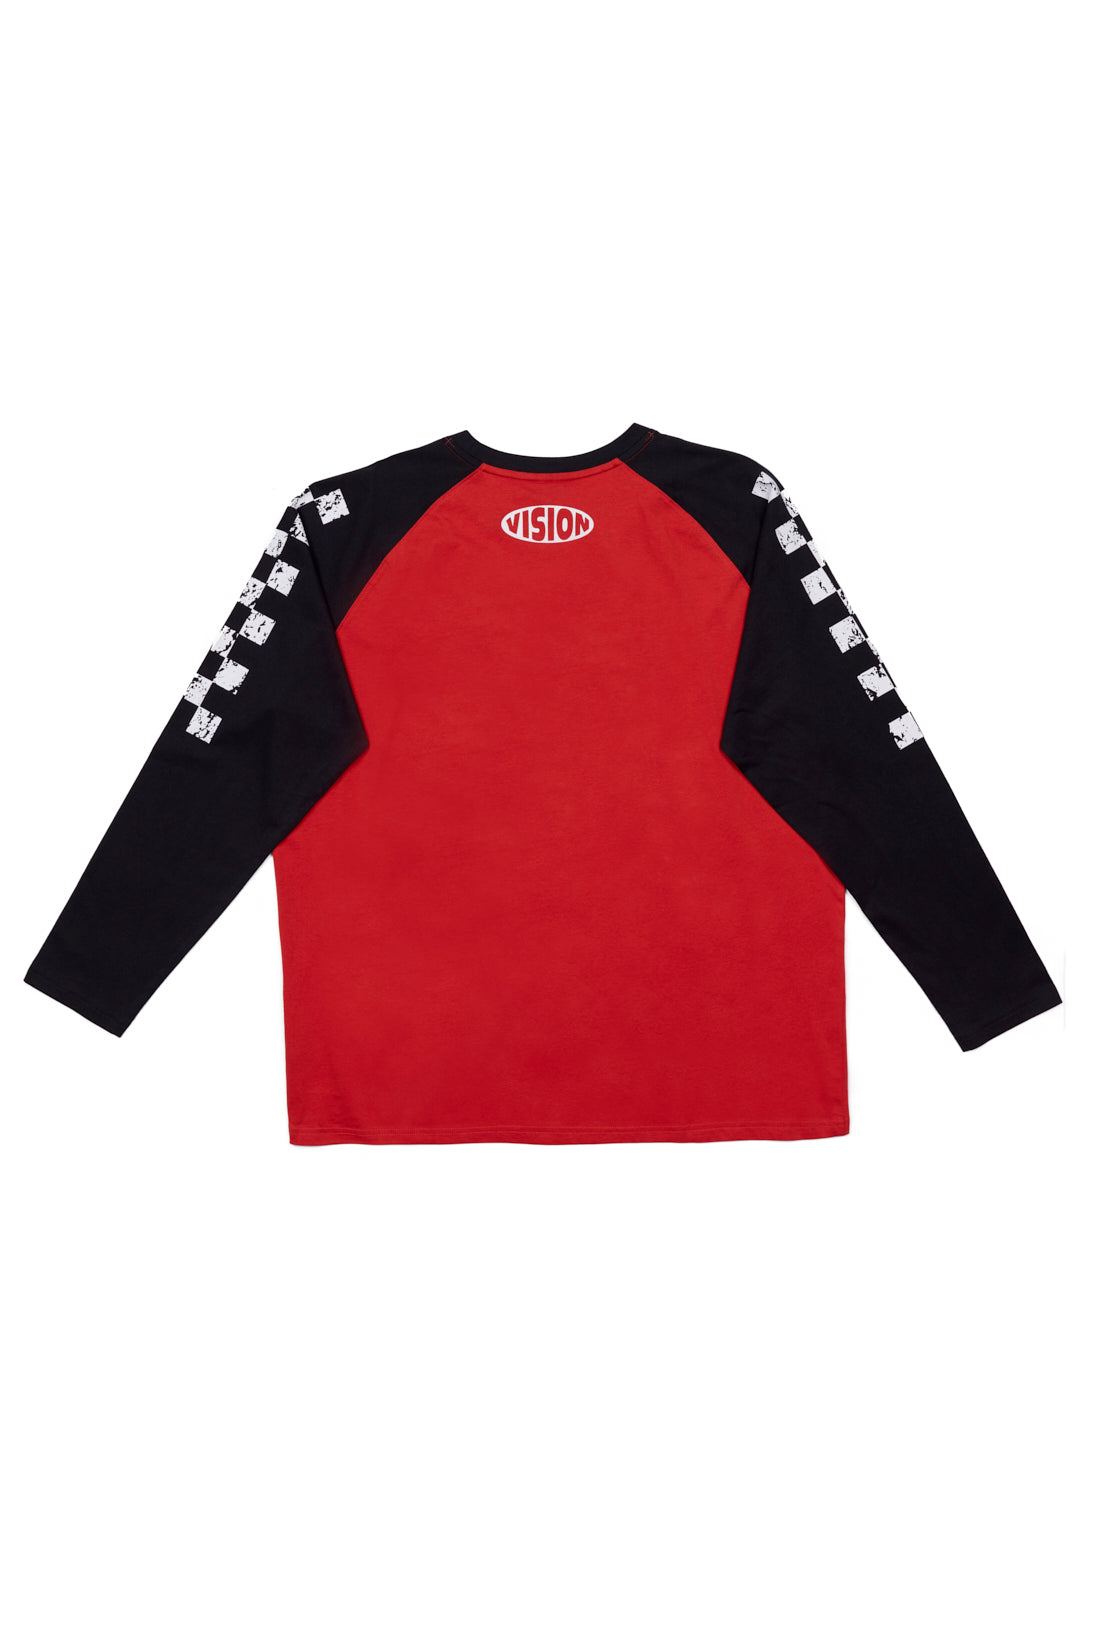 Checker Print Sleeve Logo Tee - Black/Red - DENIM SOCIETY™